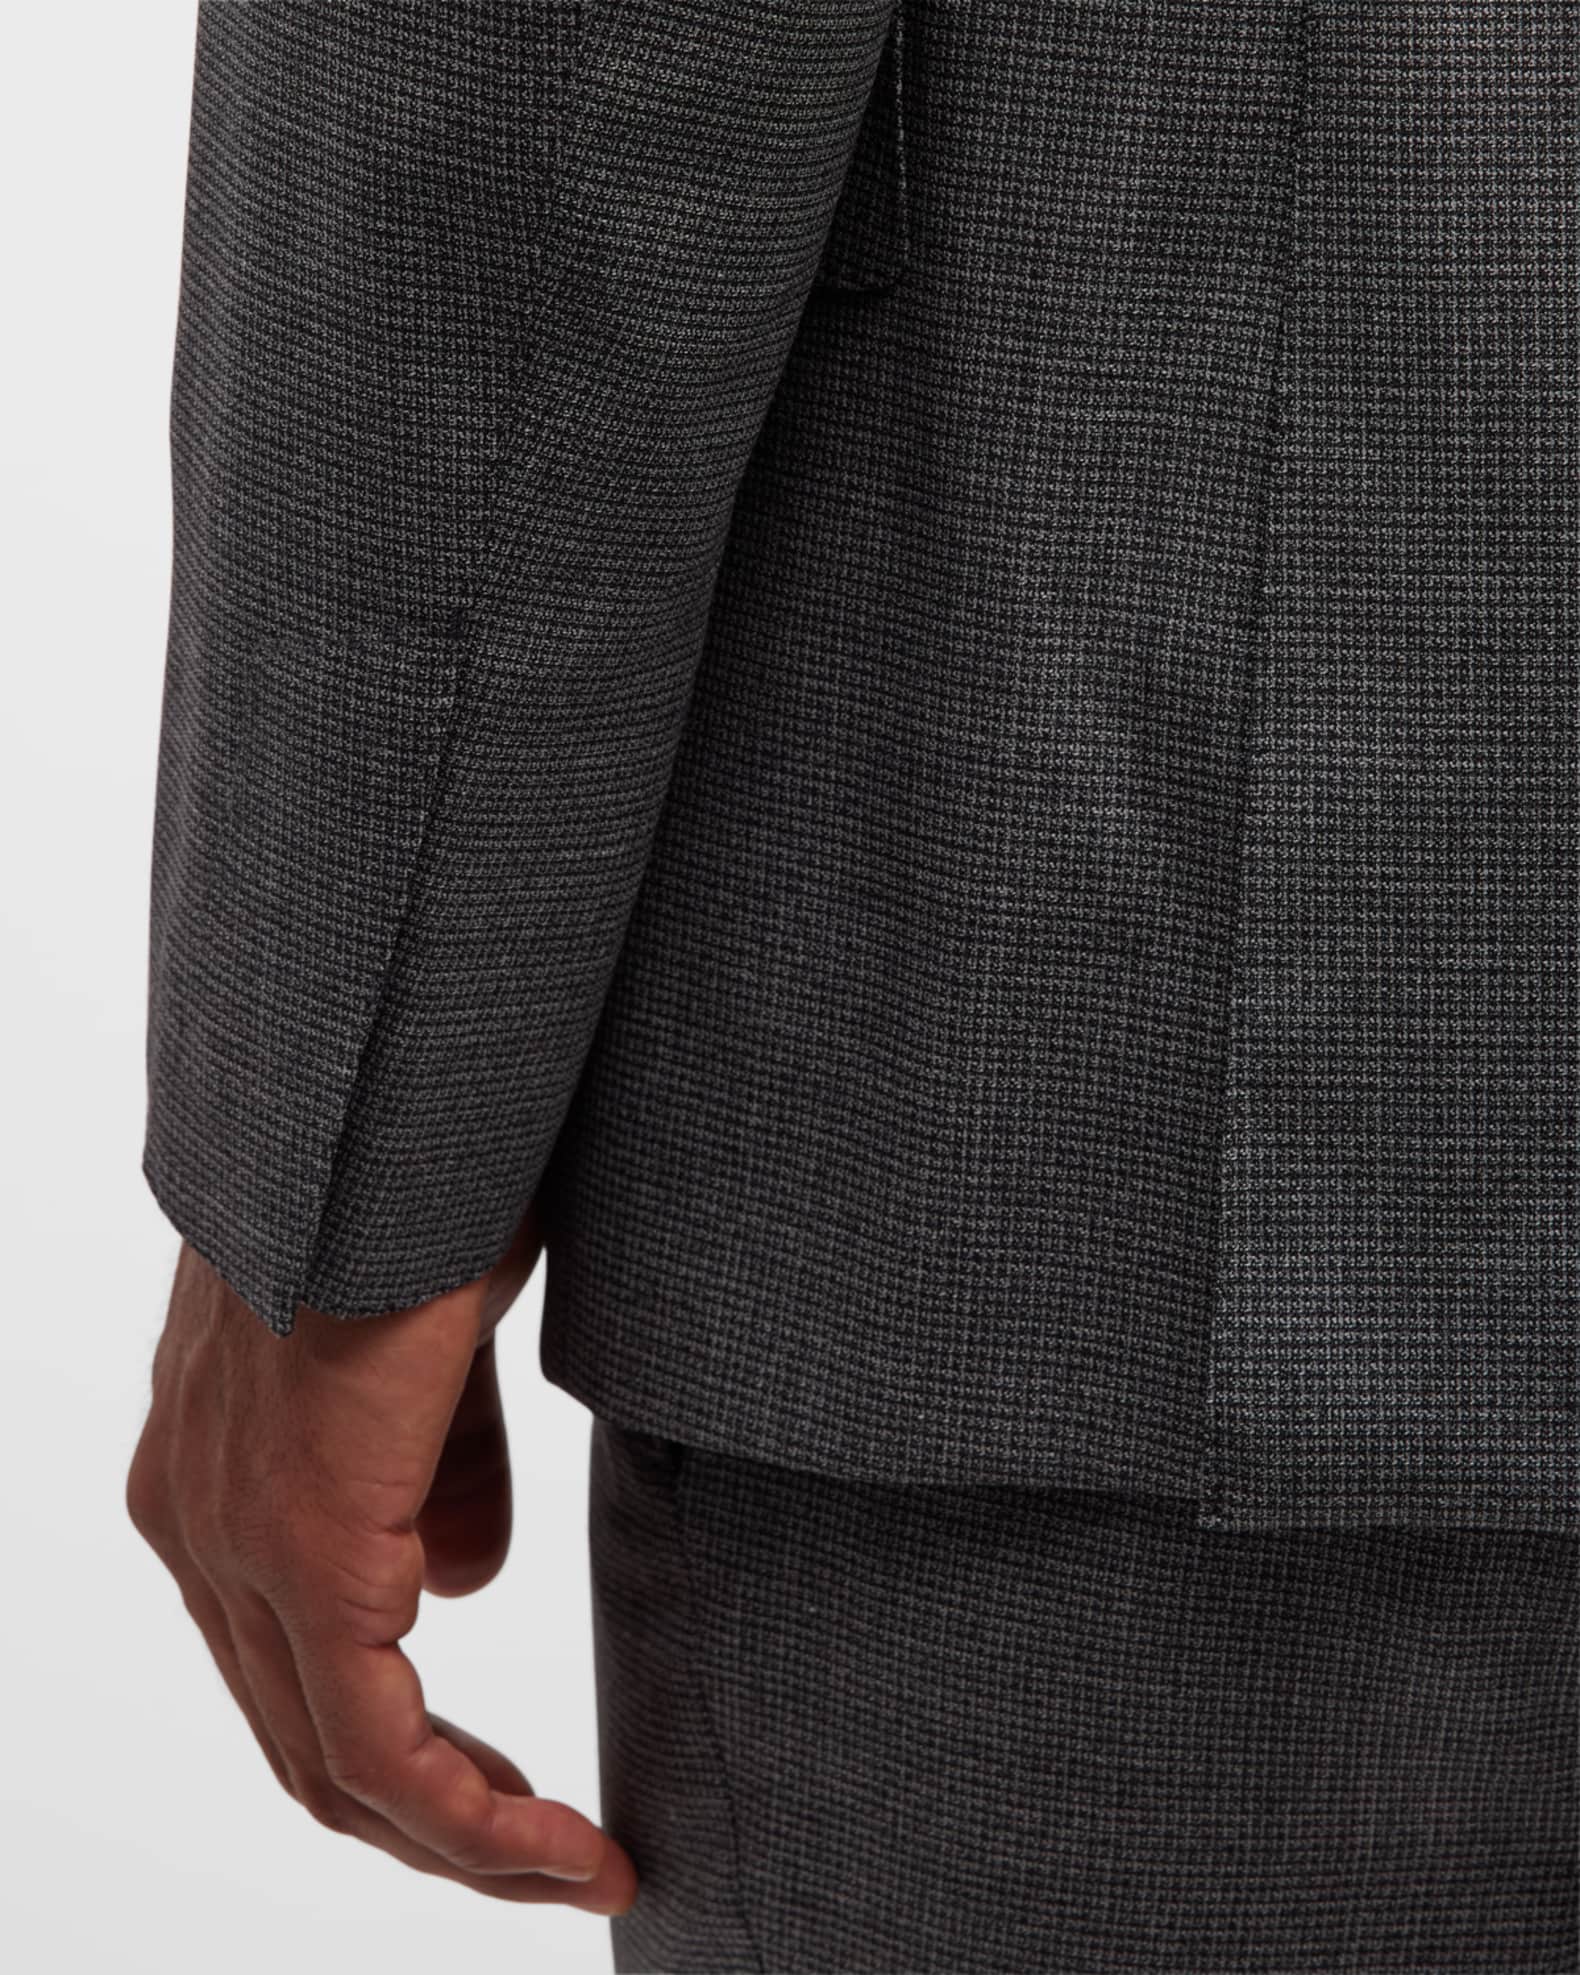 TOM FORD Men's Shelton Micro Basketweave Suit | Neiman Marcus